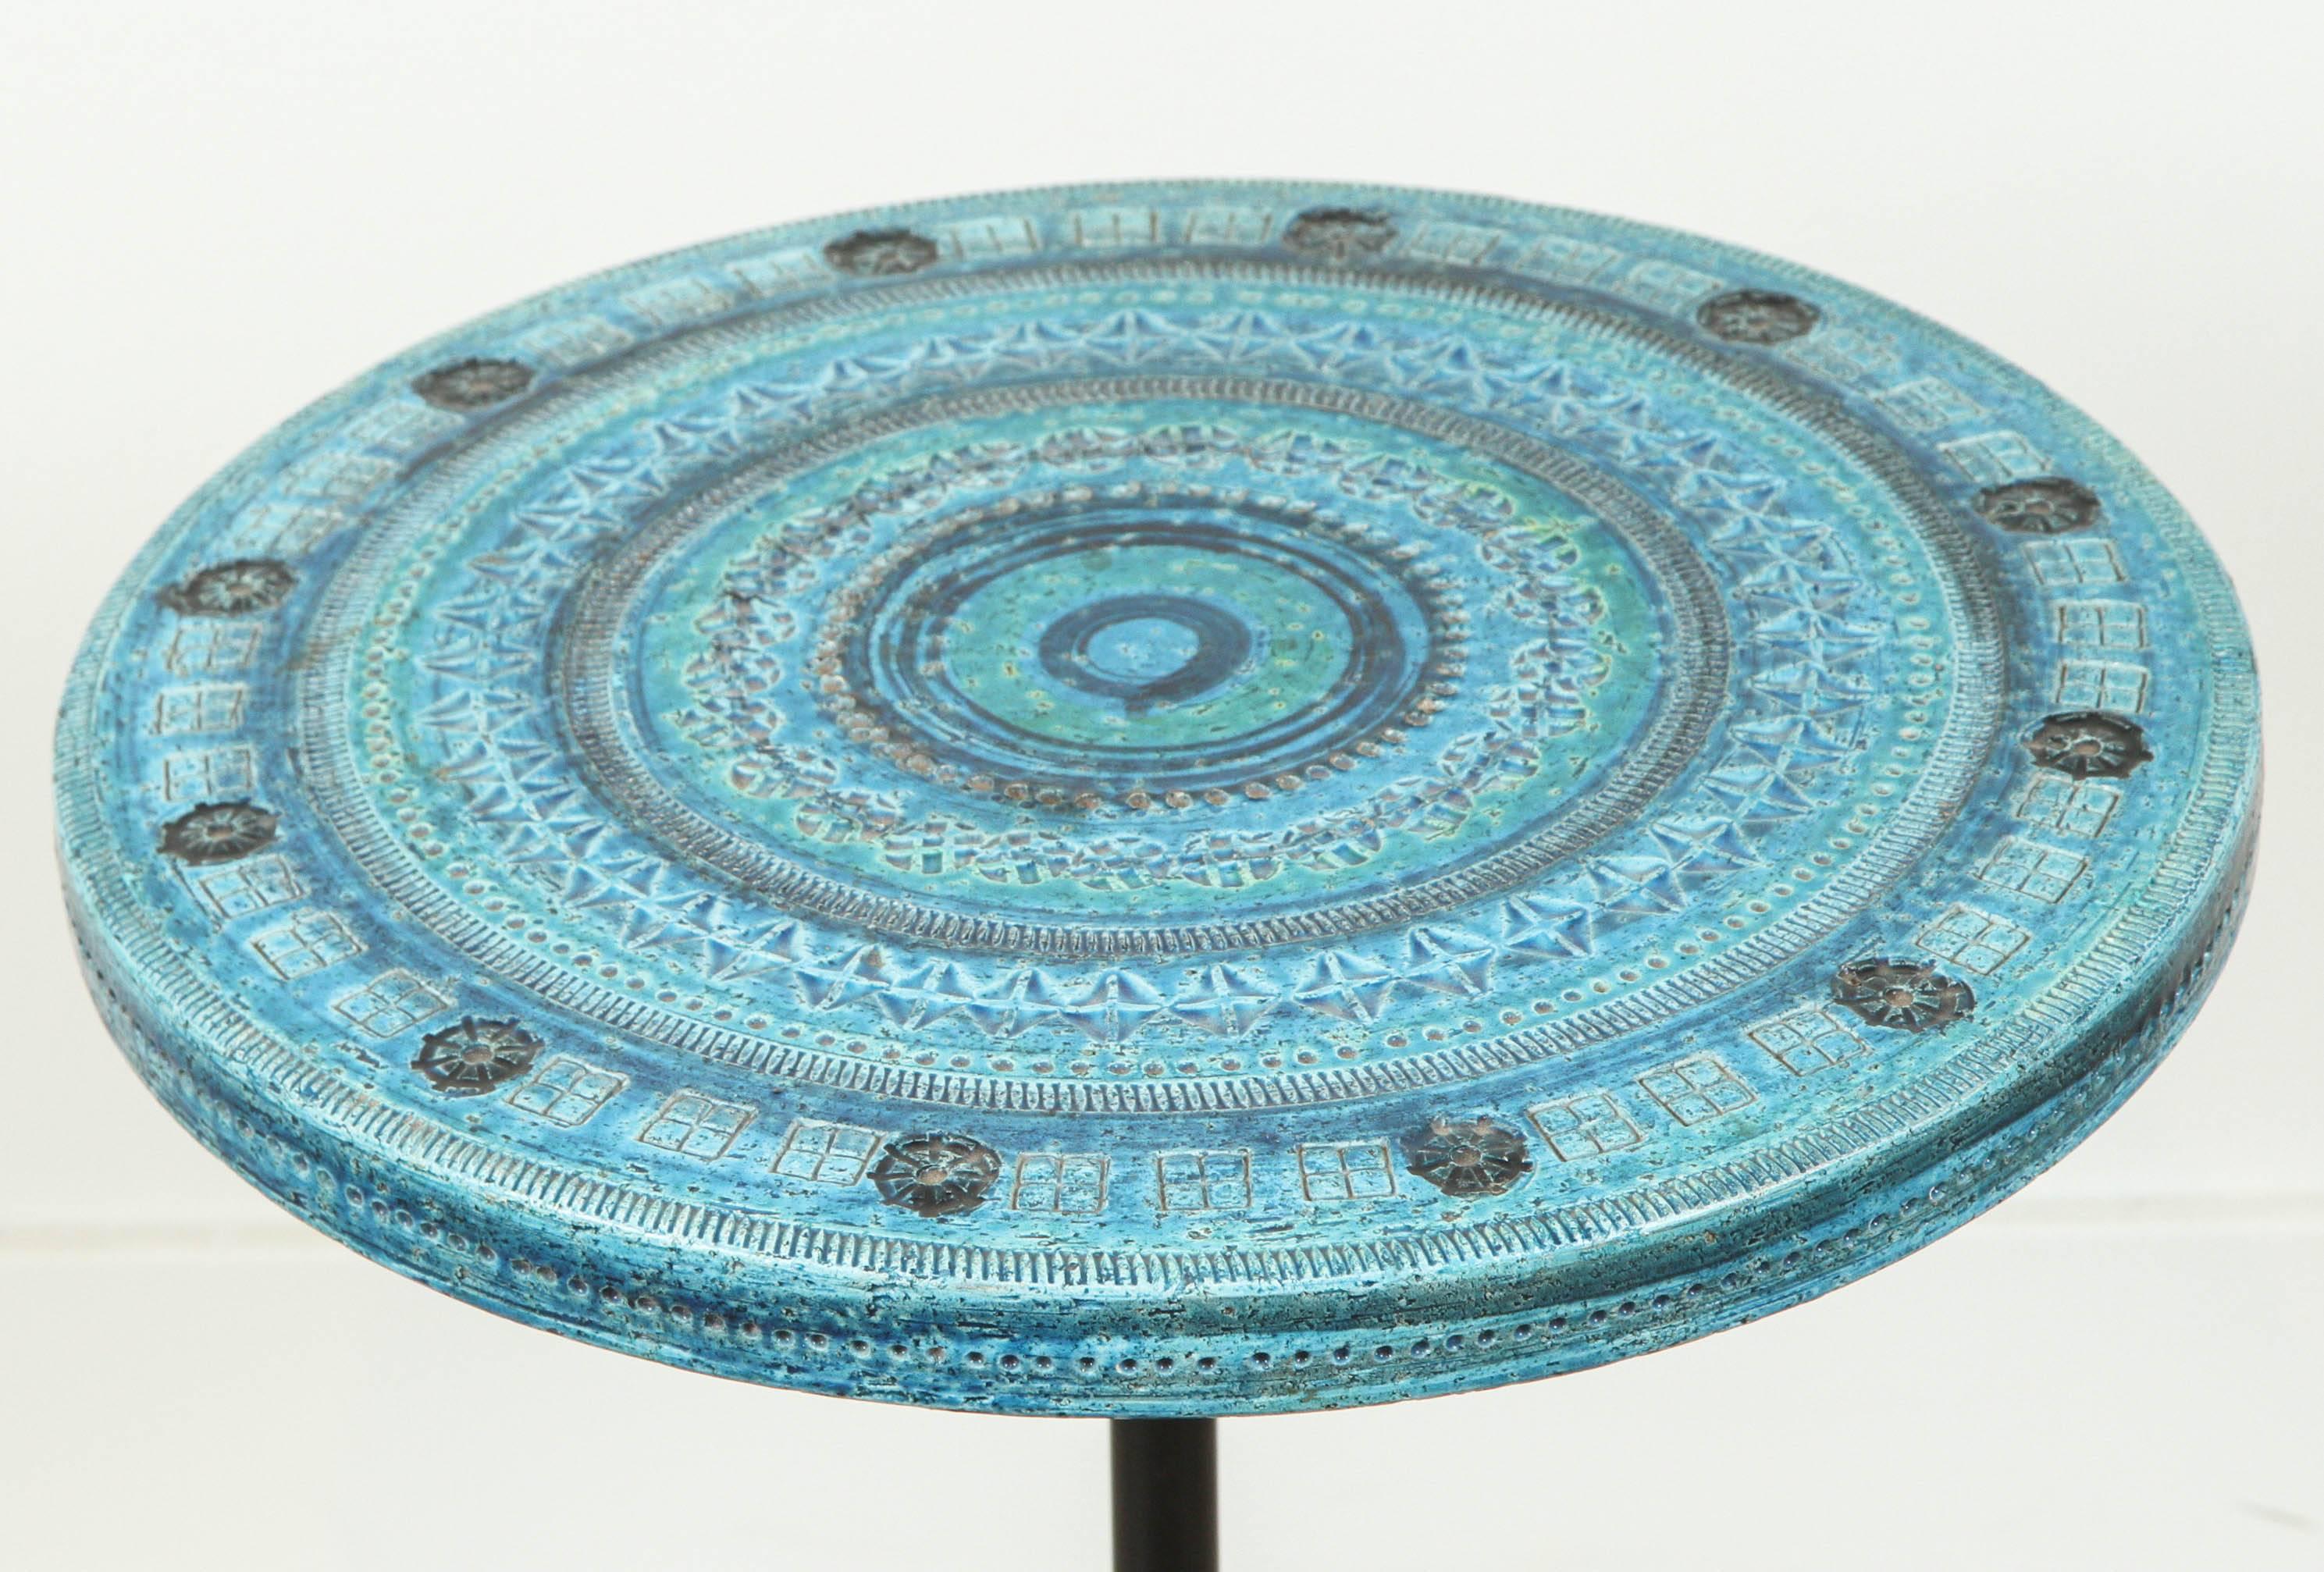 Rimini blue ceramic side table by Aldo Londi for Bitossi.

Adjustable height.